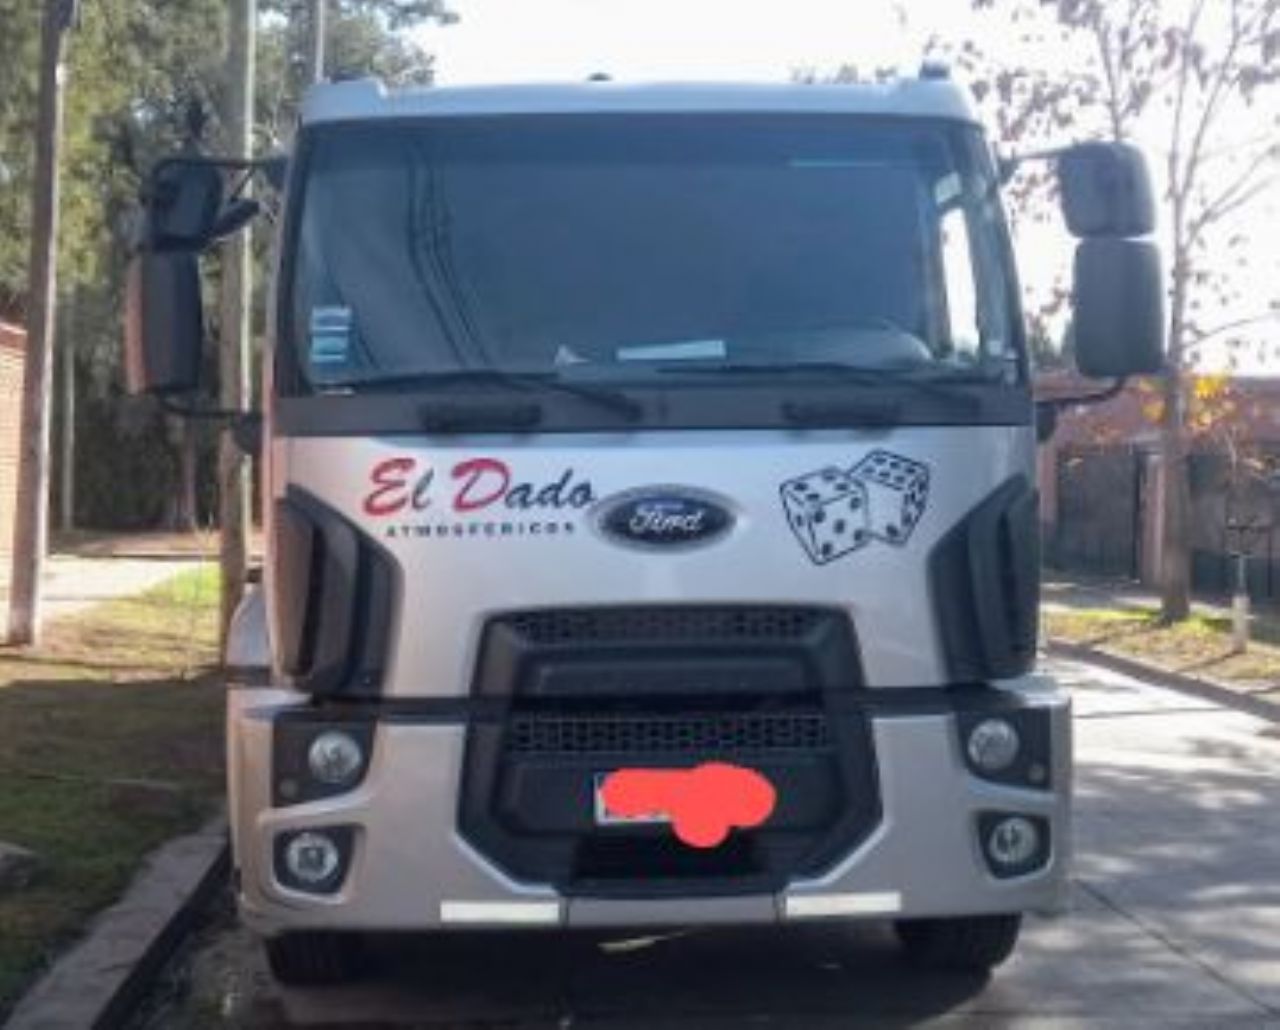 Ford Cargo Usado en Buenos Aires, deRuedas